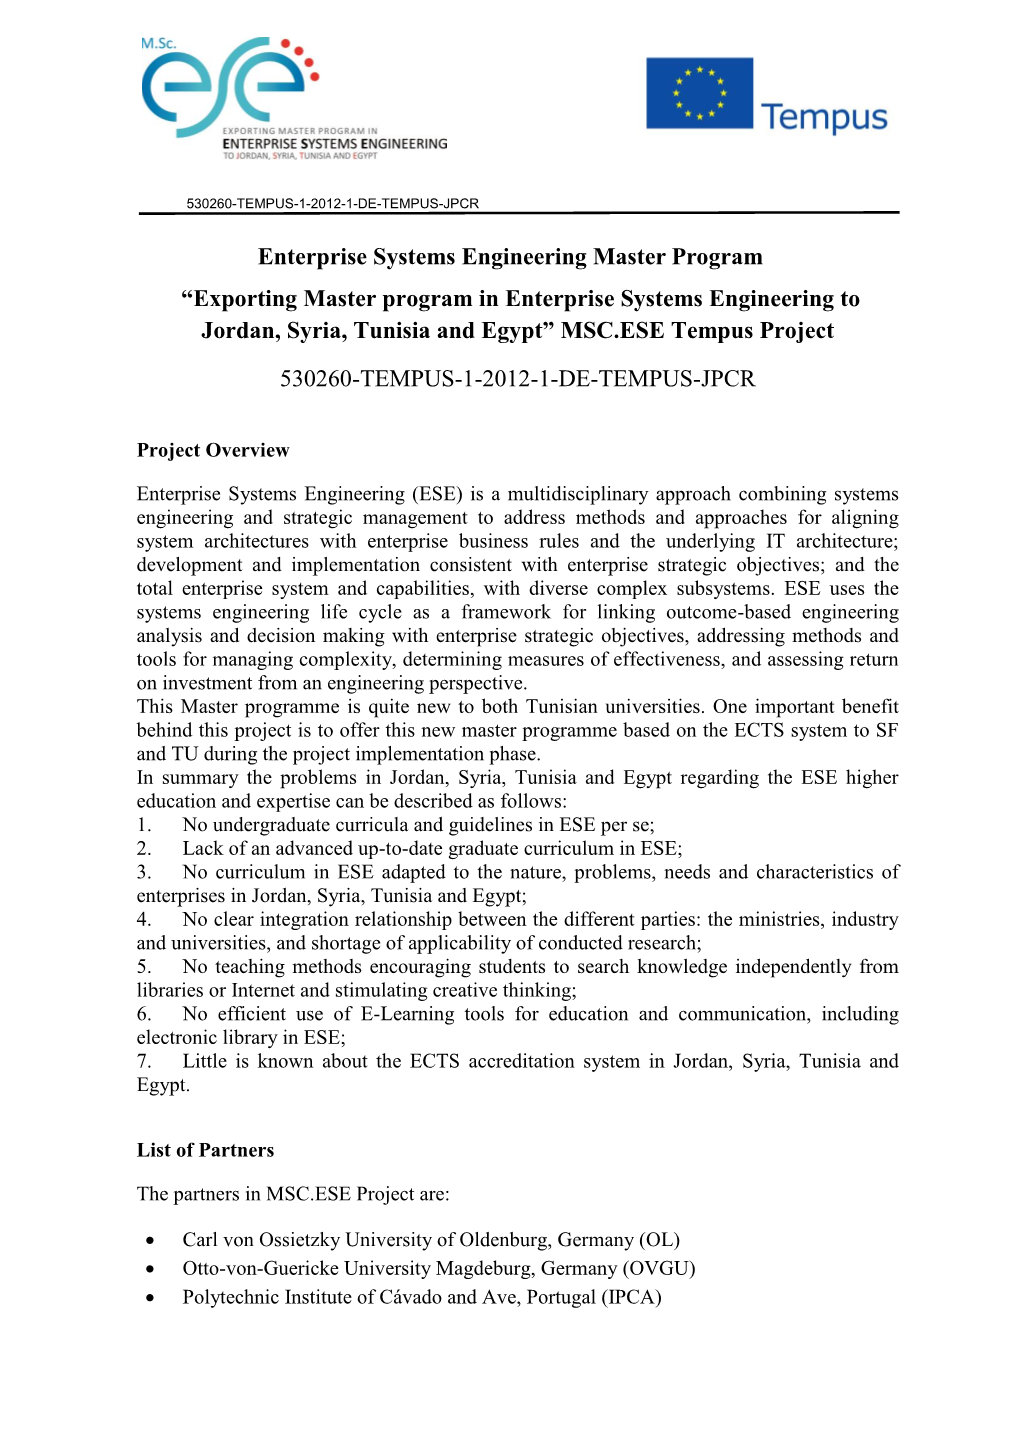 Enterprise Systems Engineering Master Program “Exporting Master Program in Enterprise Systems Engineering to Jordan, Syria, Tunisia and Egypt” MSC.ESE Tempus Project